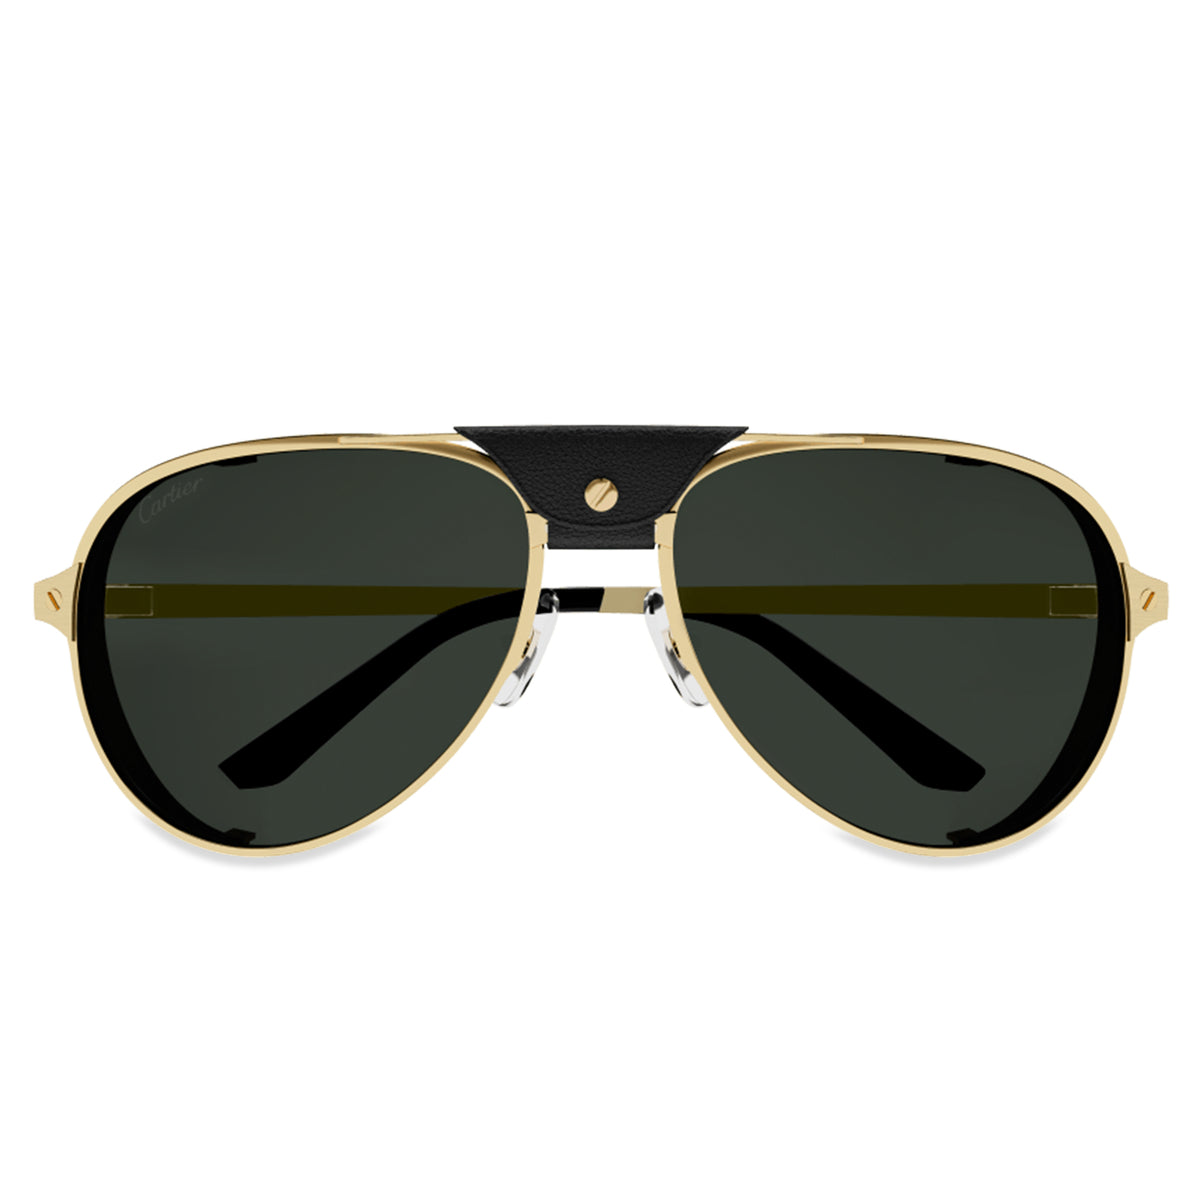 001 Black Gold Sunglasses - Dita Eyewear Narcissus sunglasses